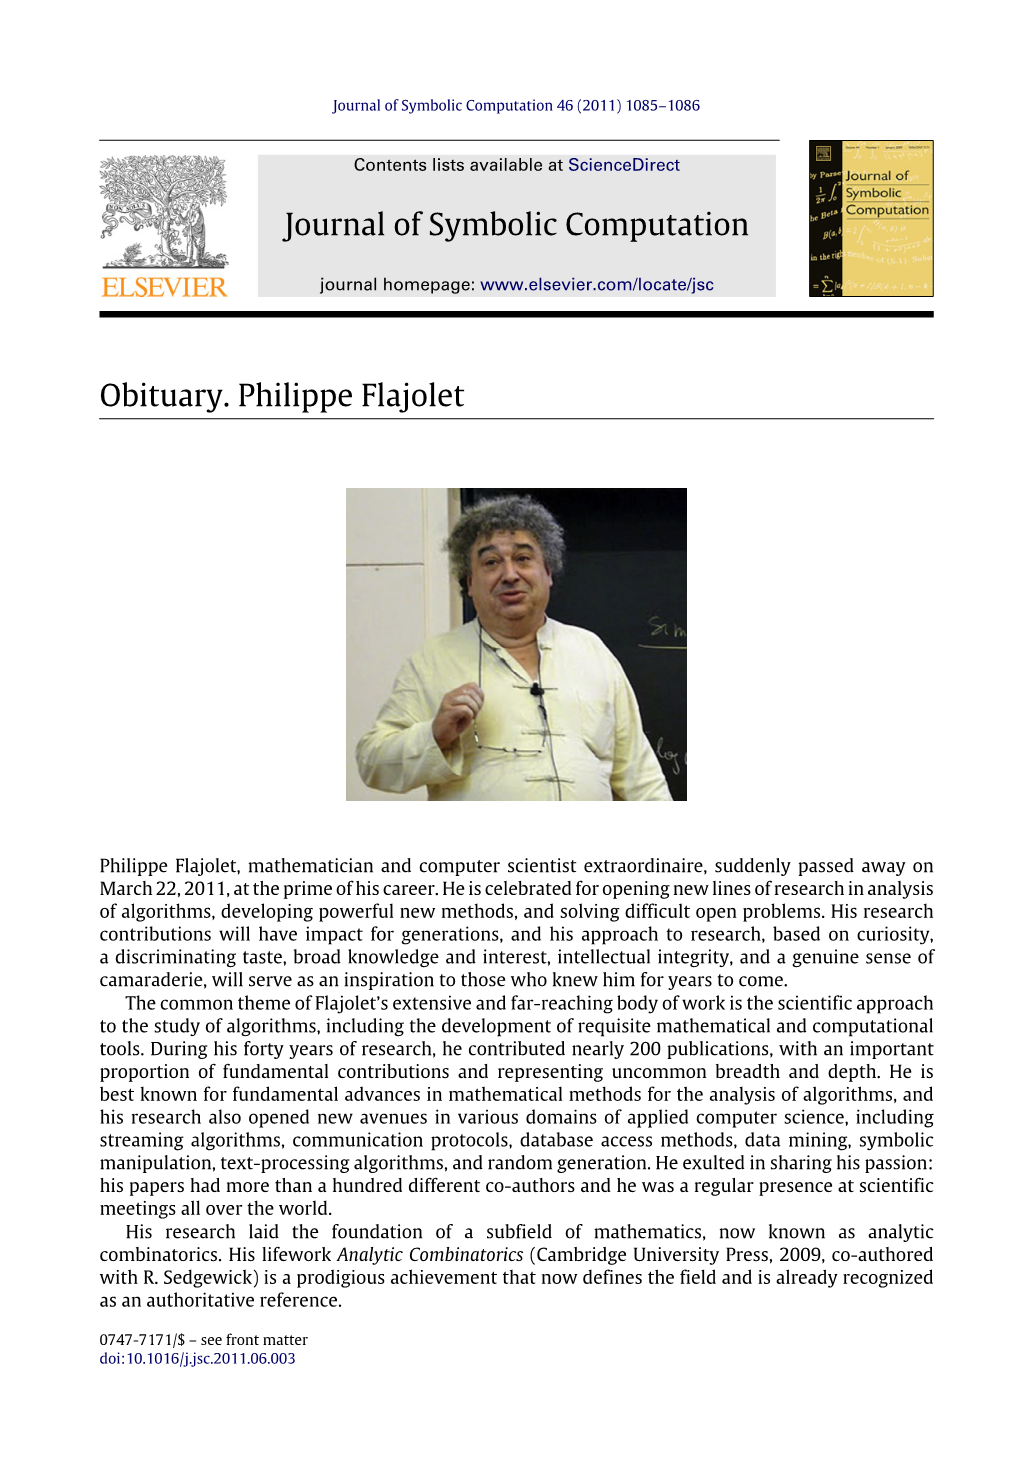 Obituary. Philippe Flajolet